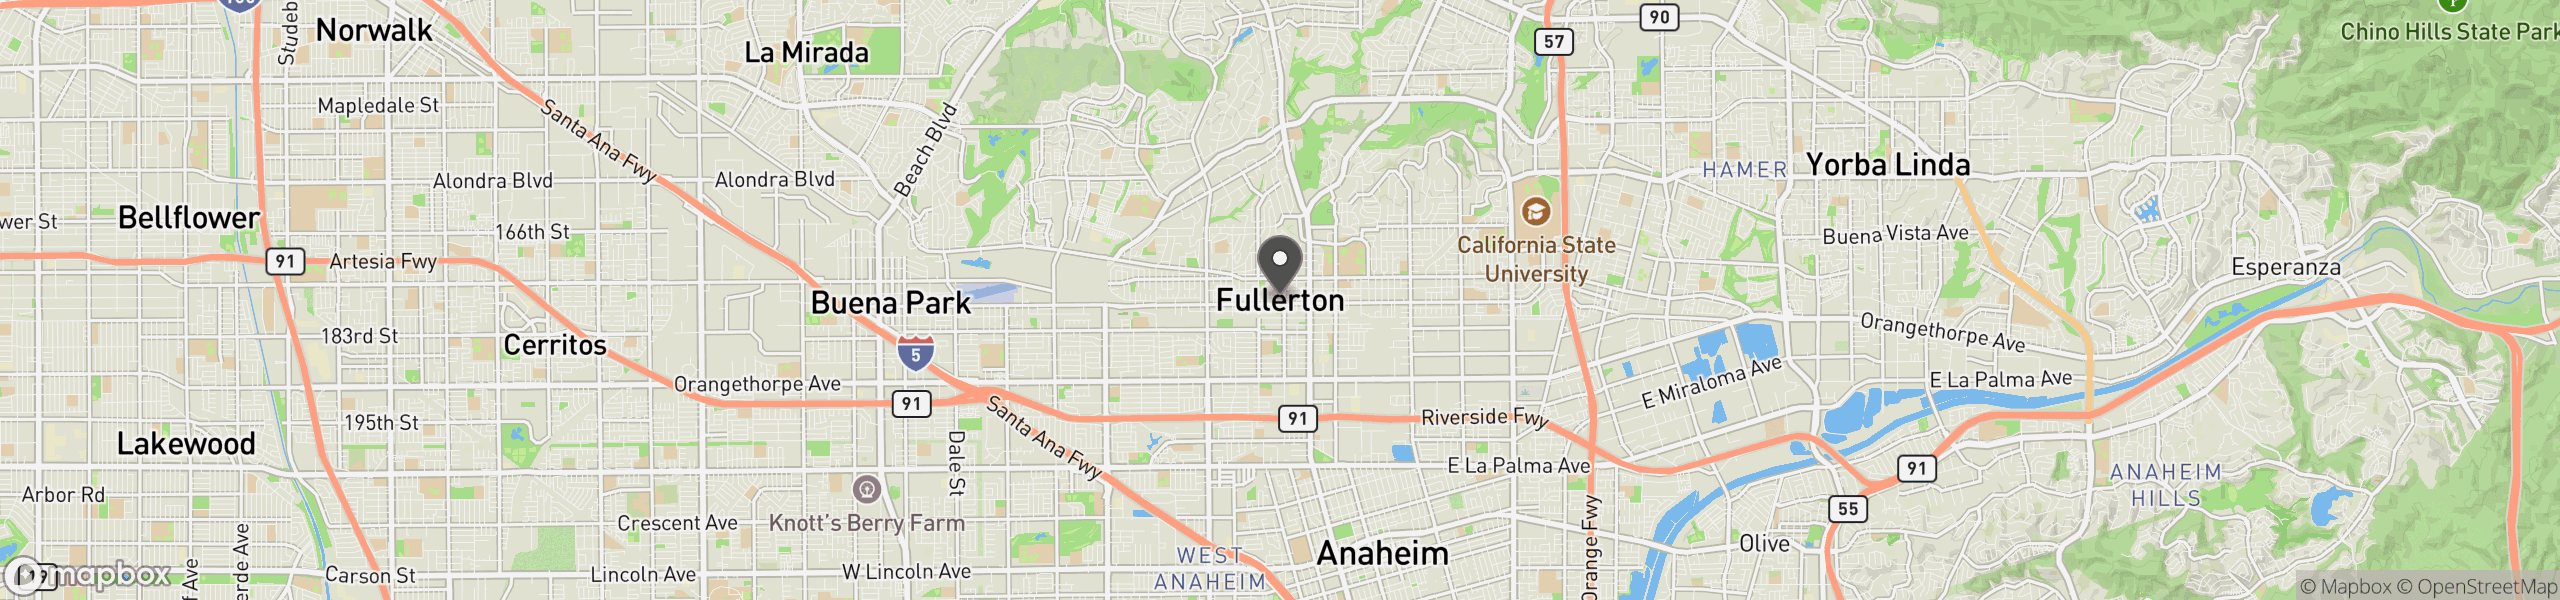 Fullerton, CA 92838